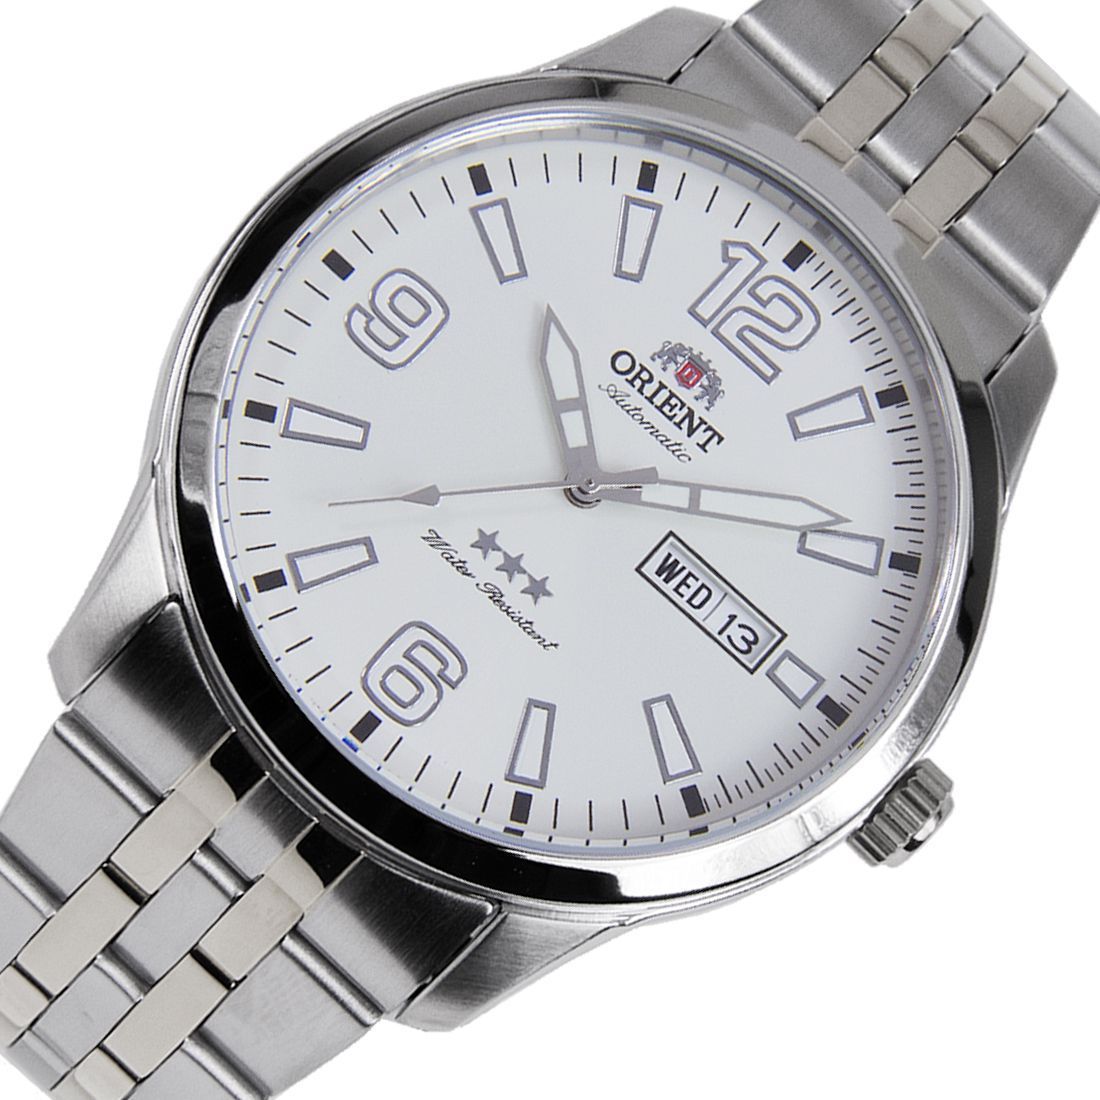 Orient Mechanical 3 Stars SAB0B006WB AB0B006W White Dial Casual Watch -Orient